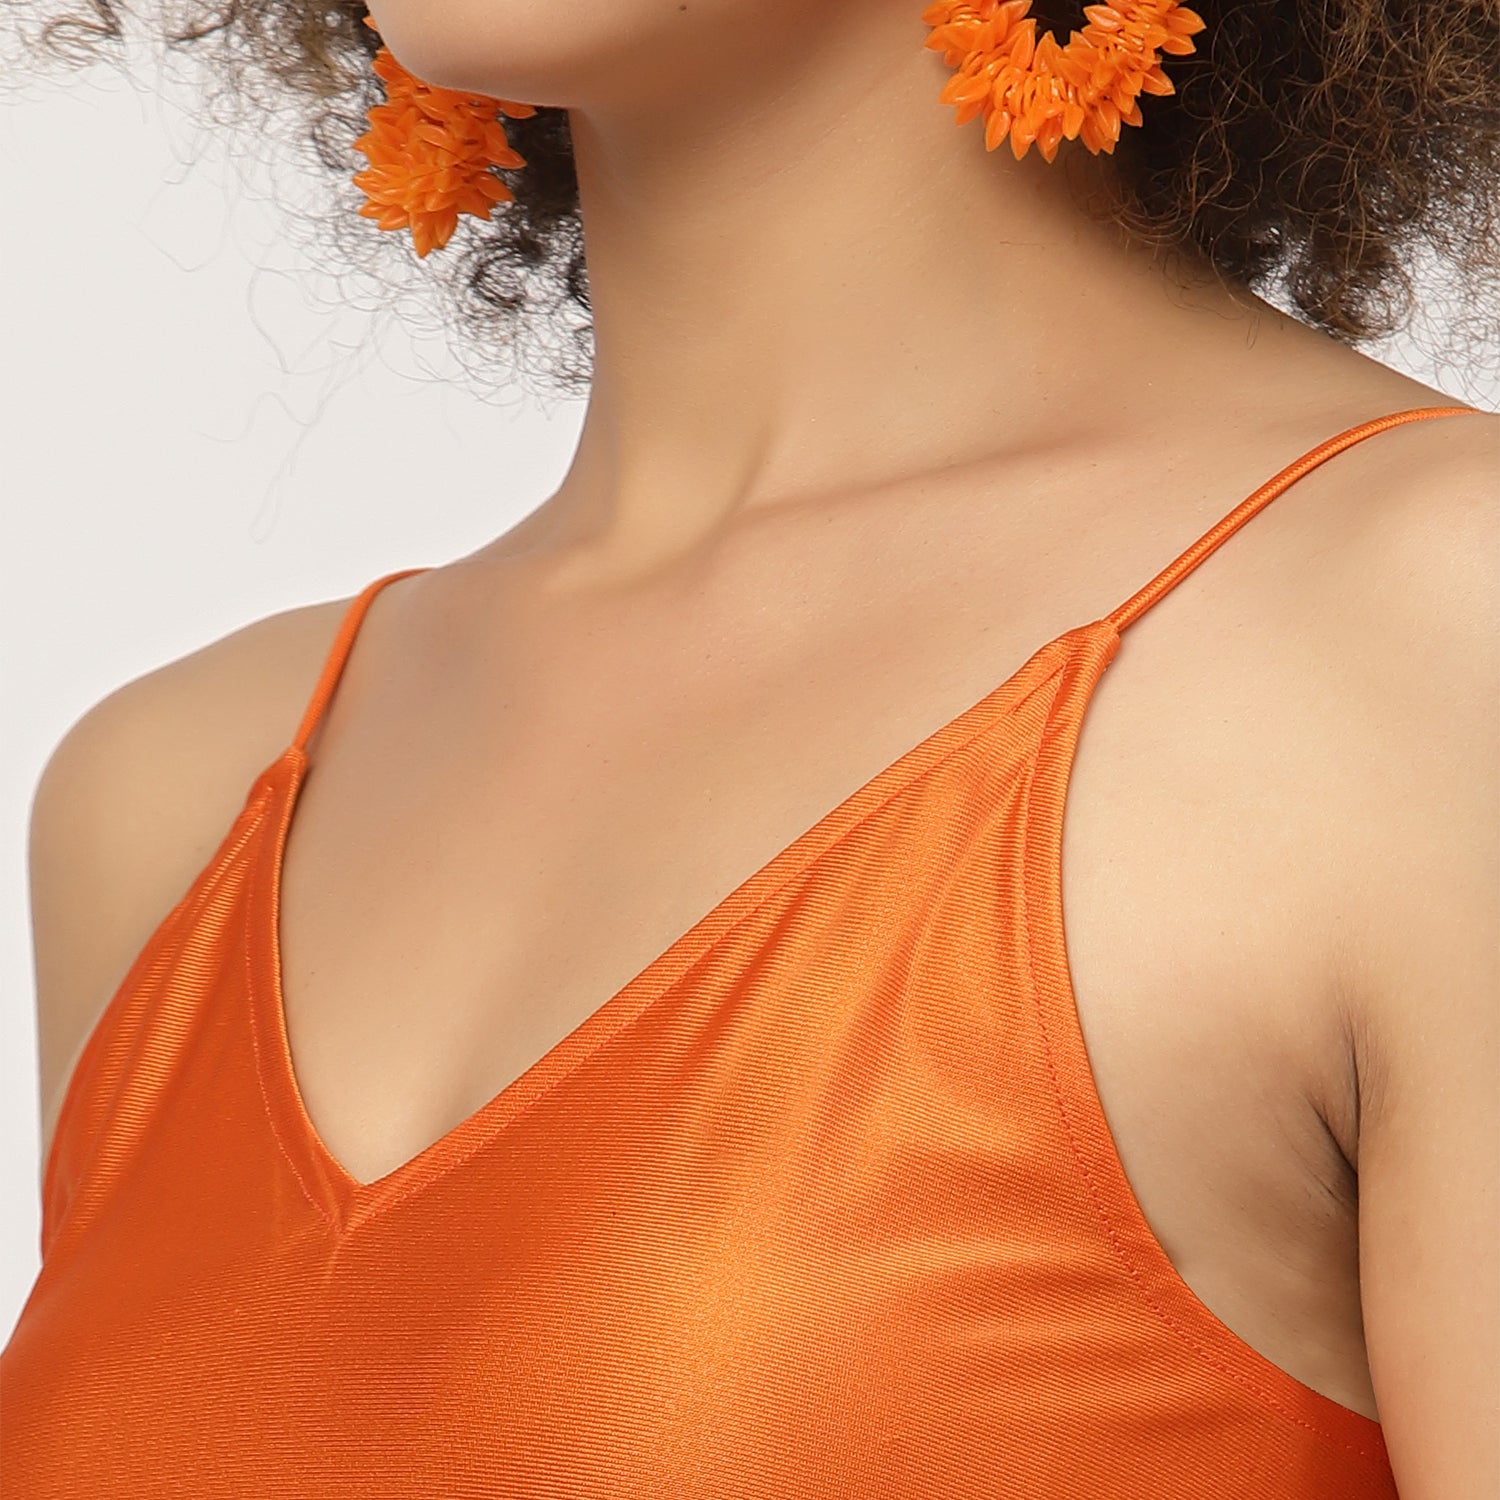 Orange Organza Top With Puff Sleeves & Lycra Inner